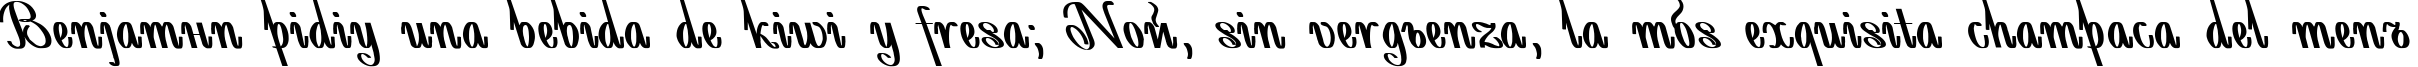 Пример написания шрифтом AntiDecor Bold Italic текста на испанском